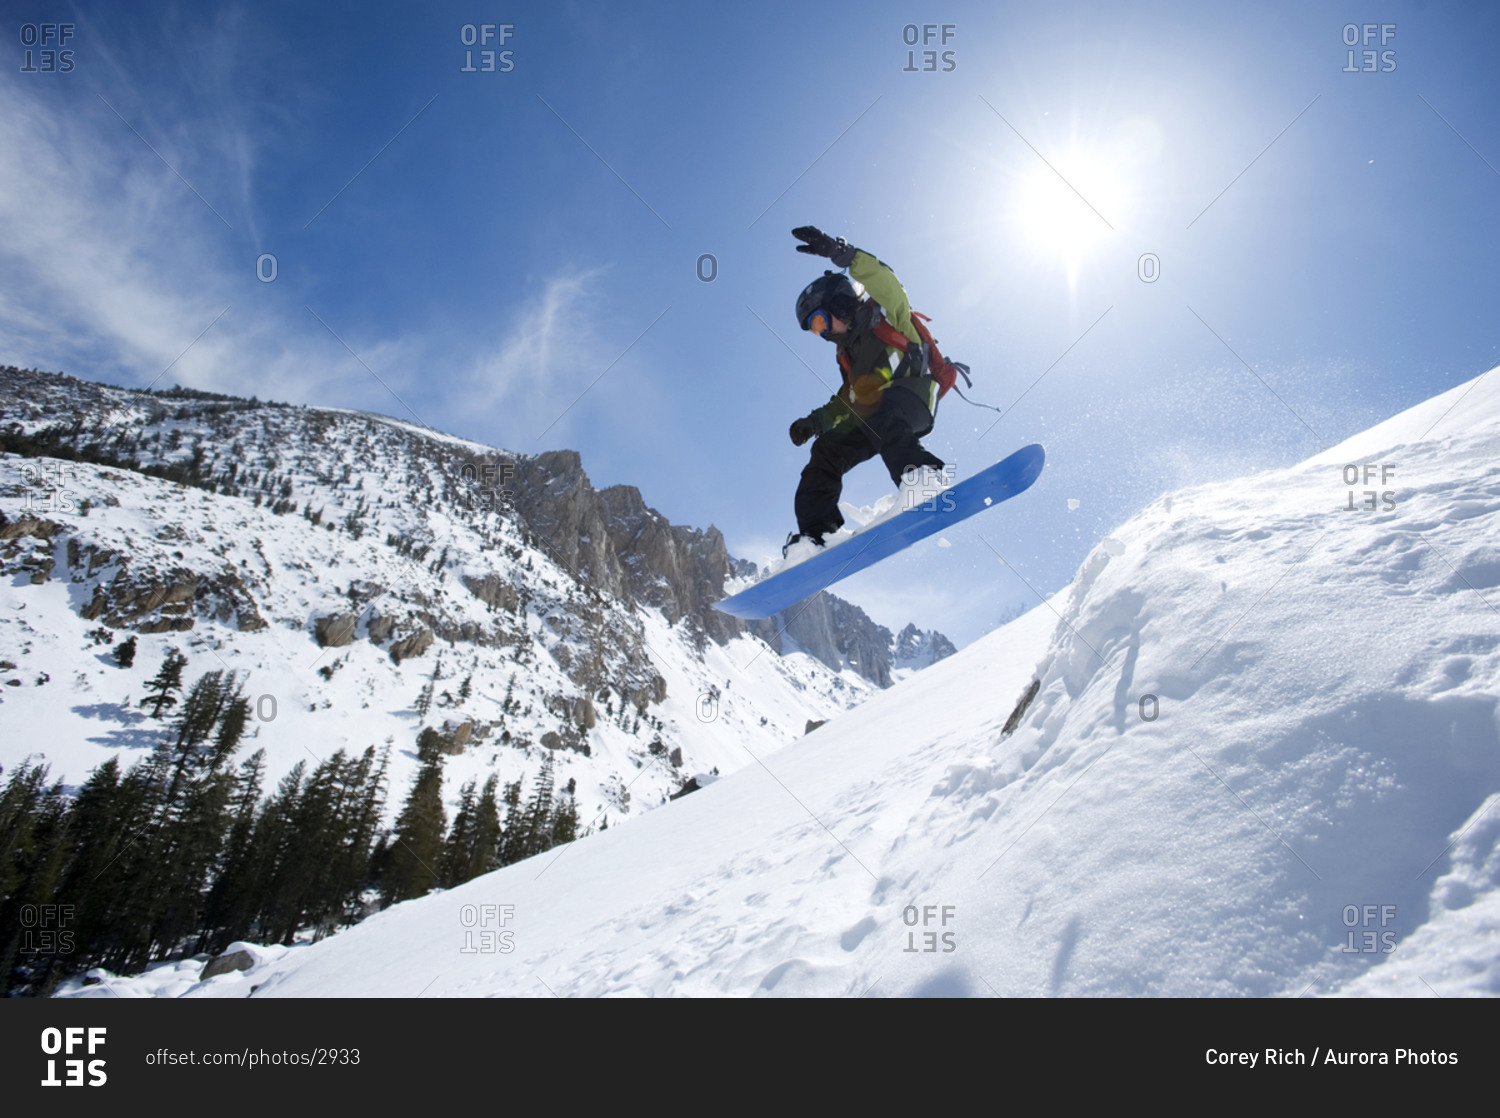 A boy snowboarding in the California backcountry